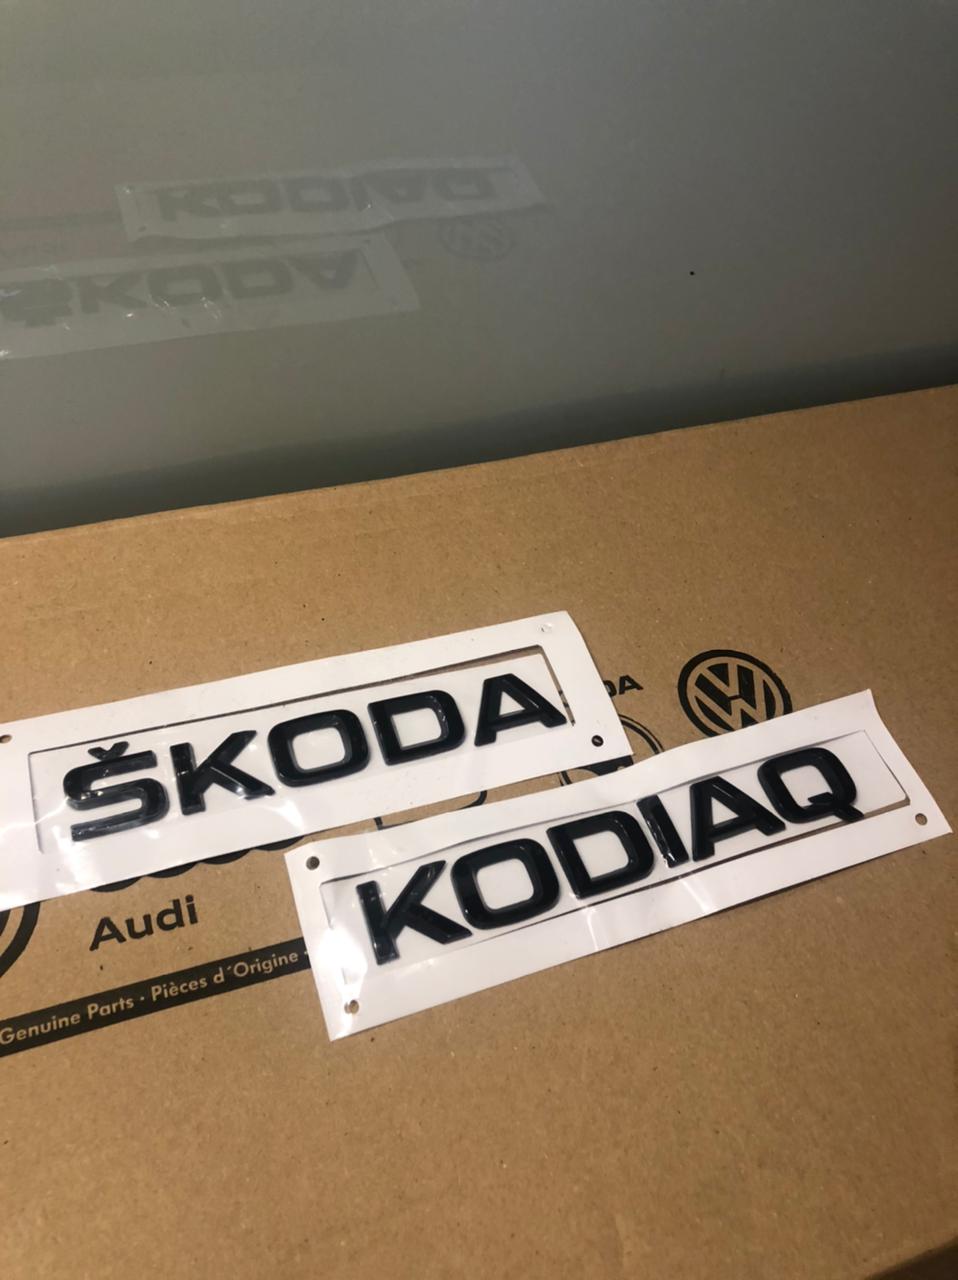 Шилдики "Skoda" и "Kodiaq" Black